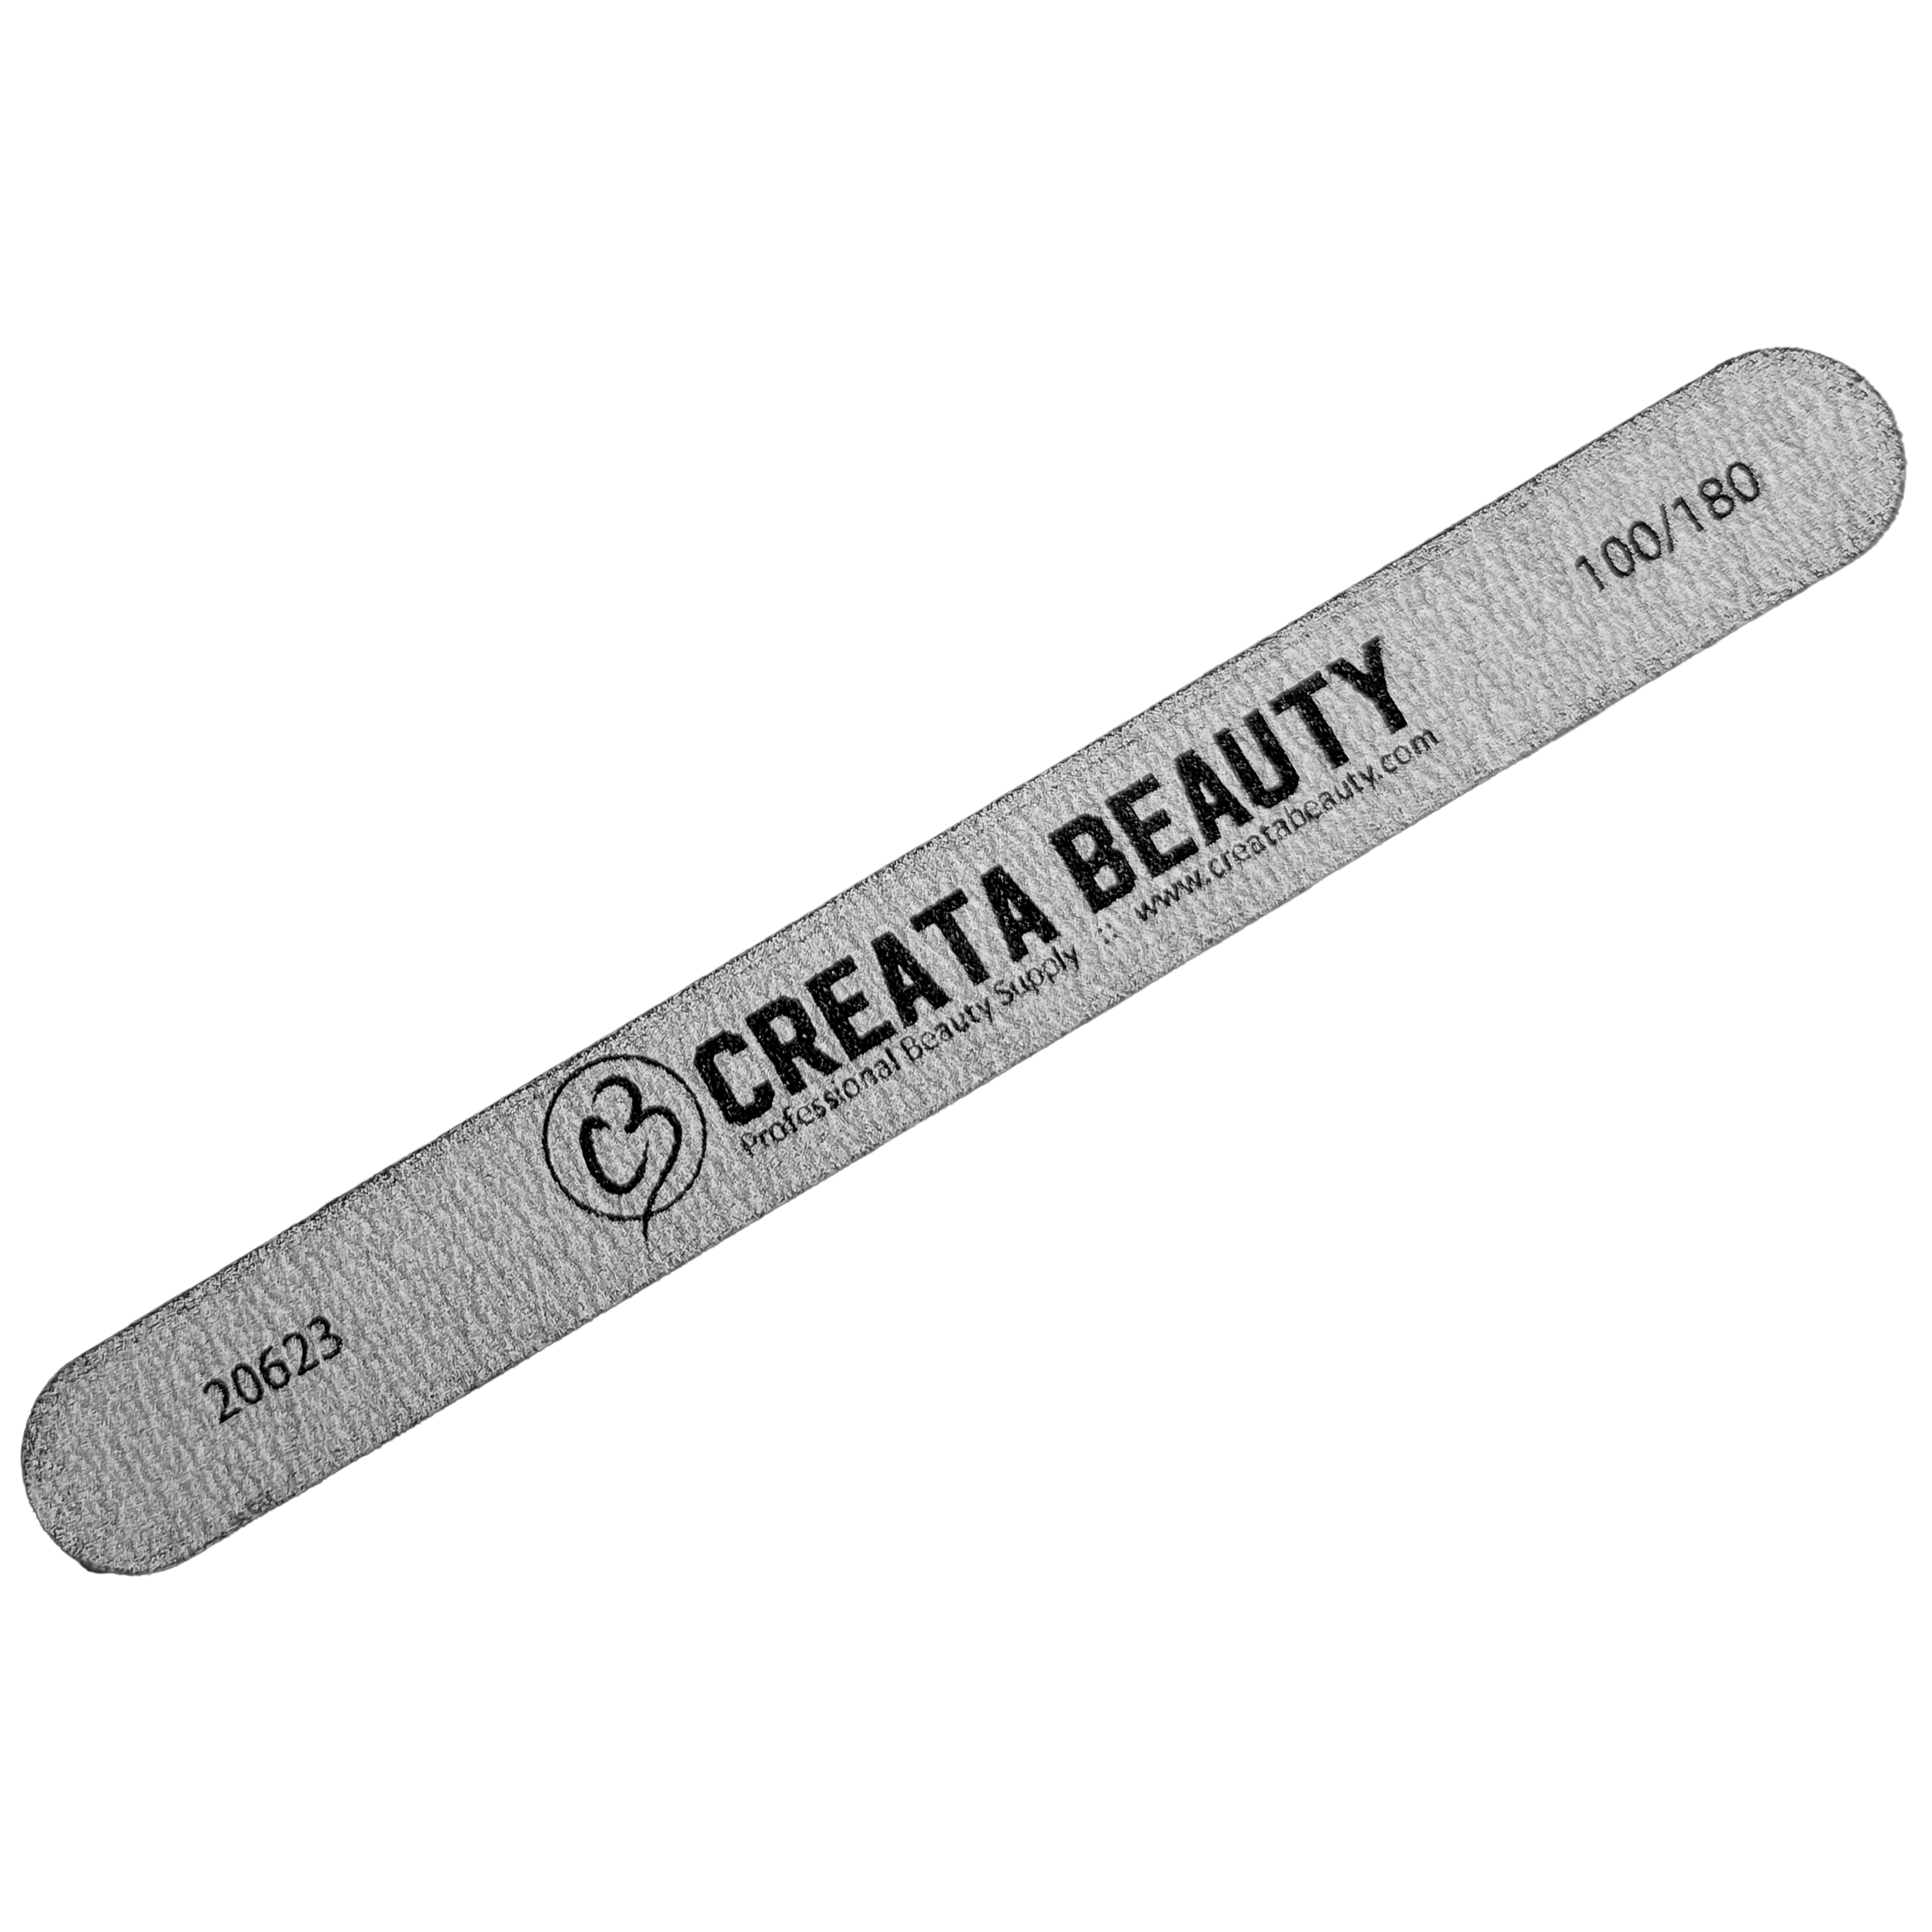 Creata Beauty Premium Files - Zebra - Creata Beauty - Professional Beauty Products